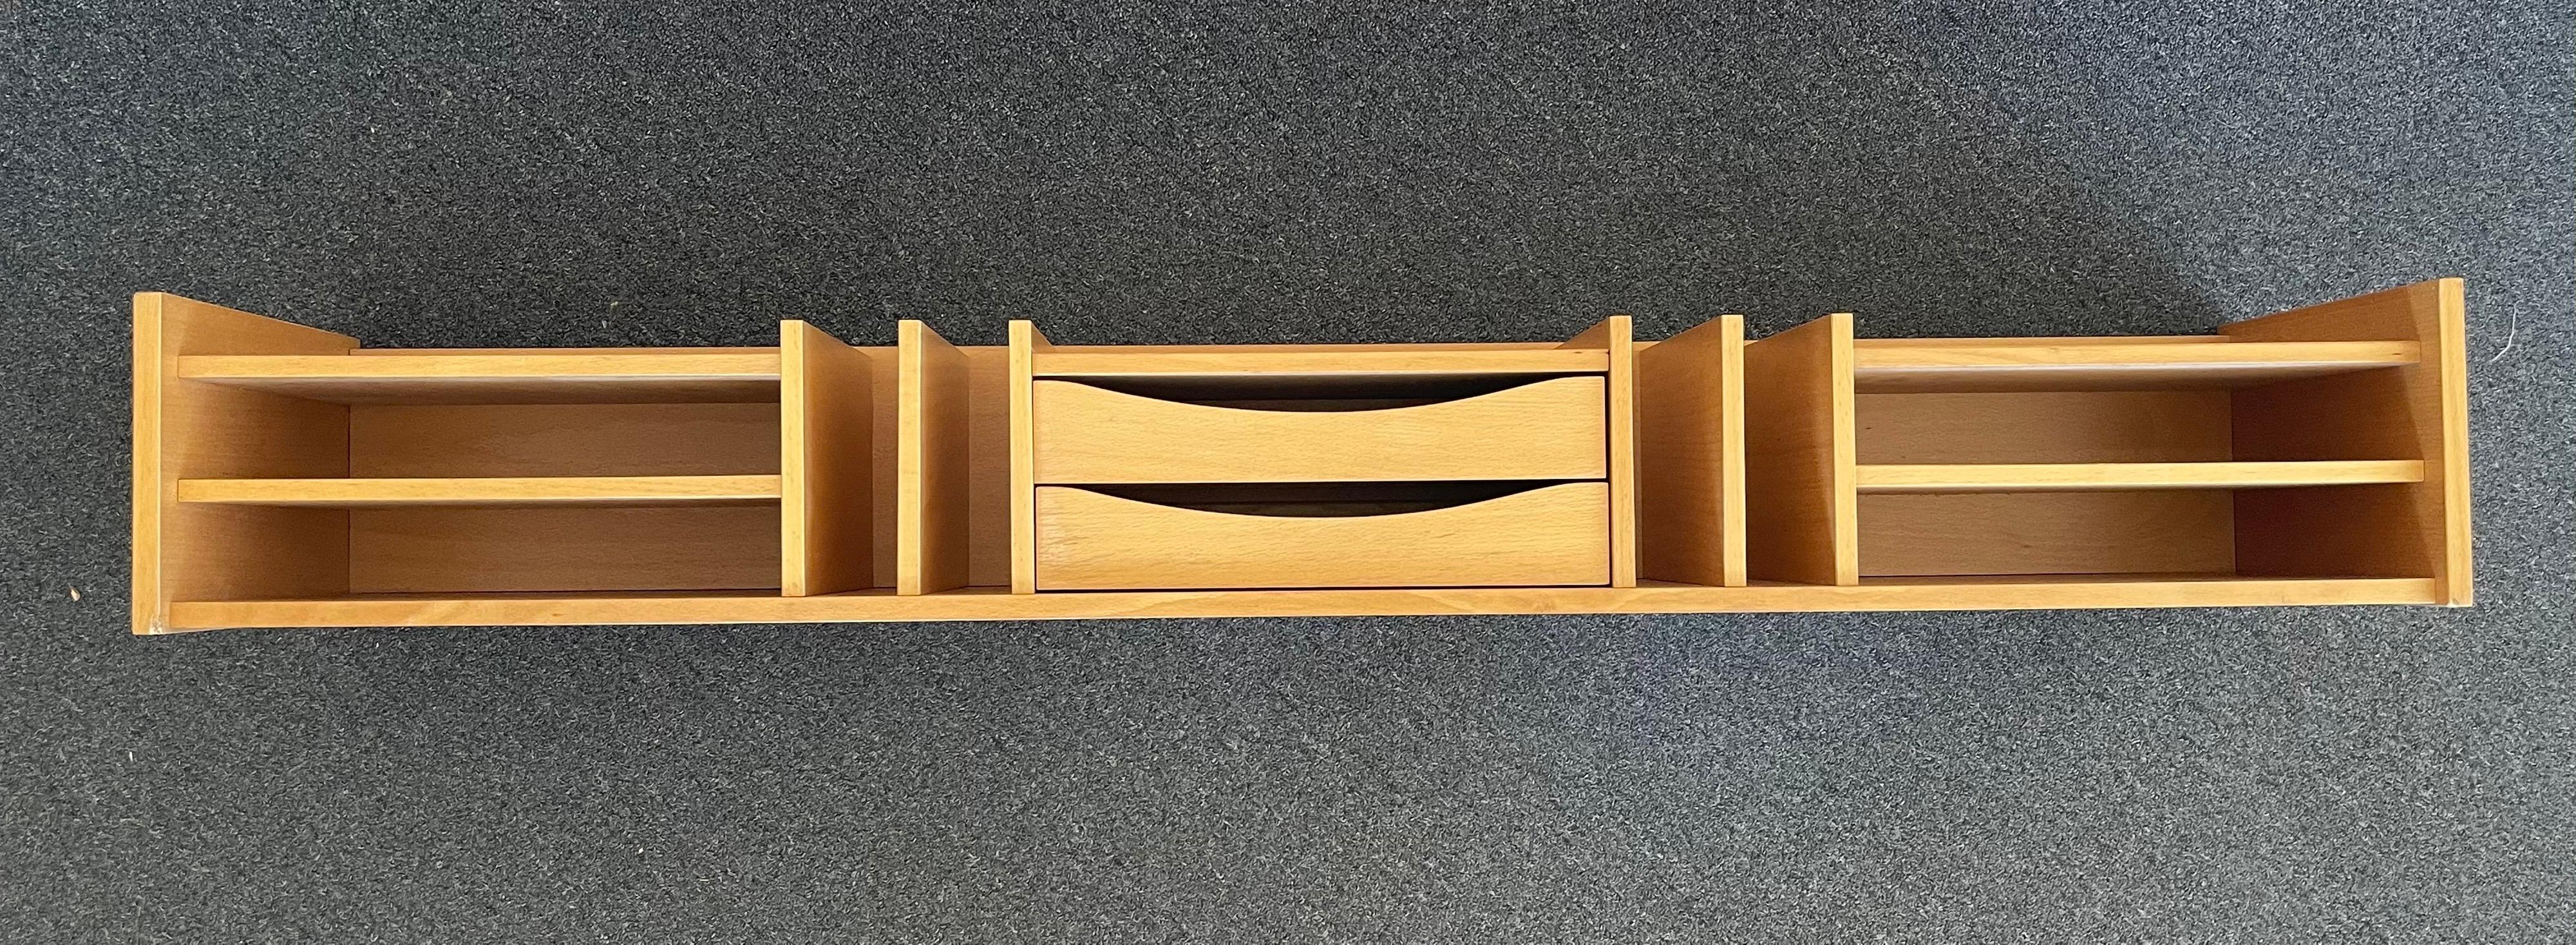 Laminated Extra Large Desk Organizer or Letter Tray in Teak by Pedersen & Hansen For Sale